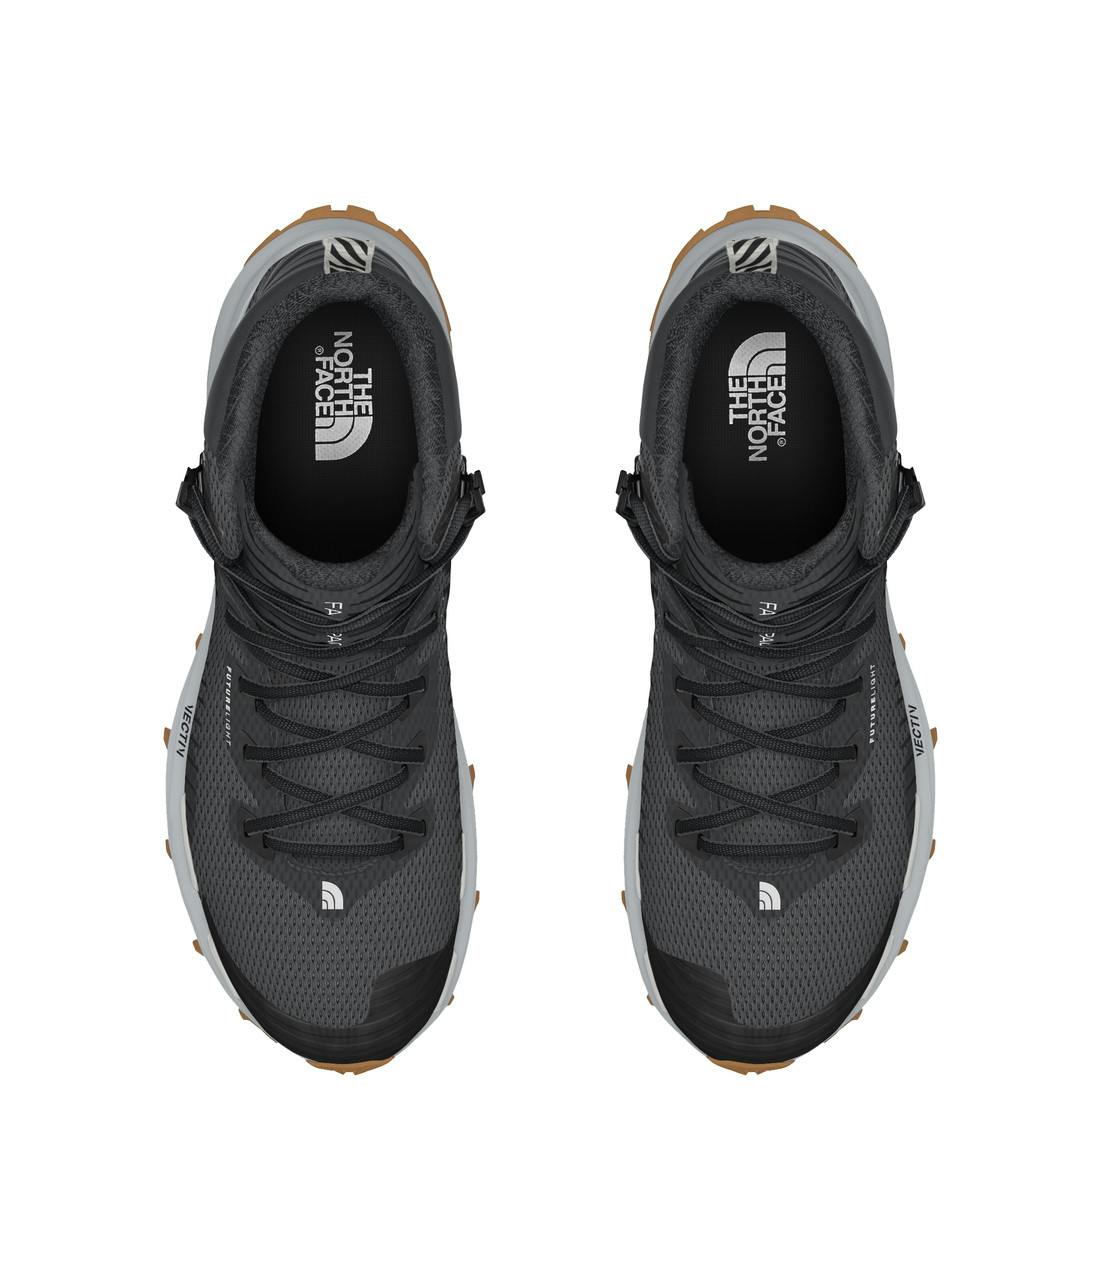 Vectiv Fastpack Mid Futurelight Shoes Asphalt Grey/TNF Black